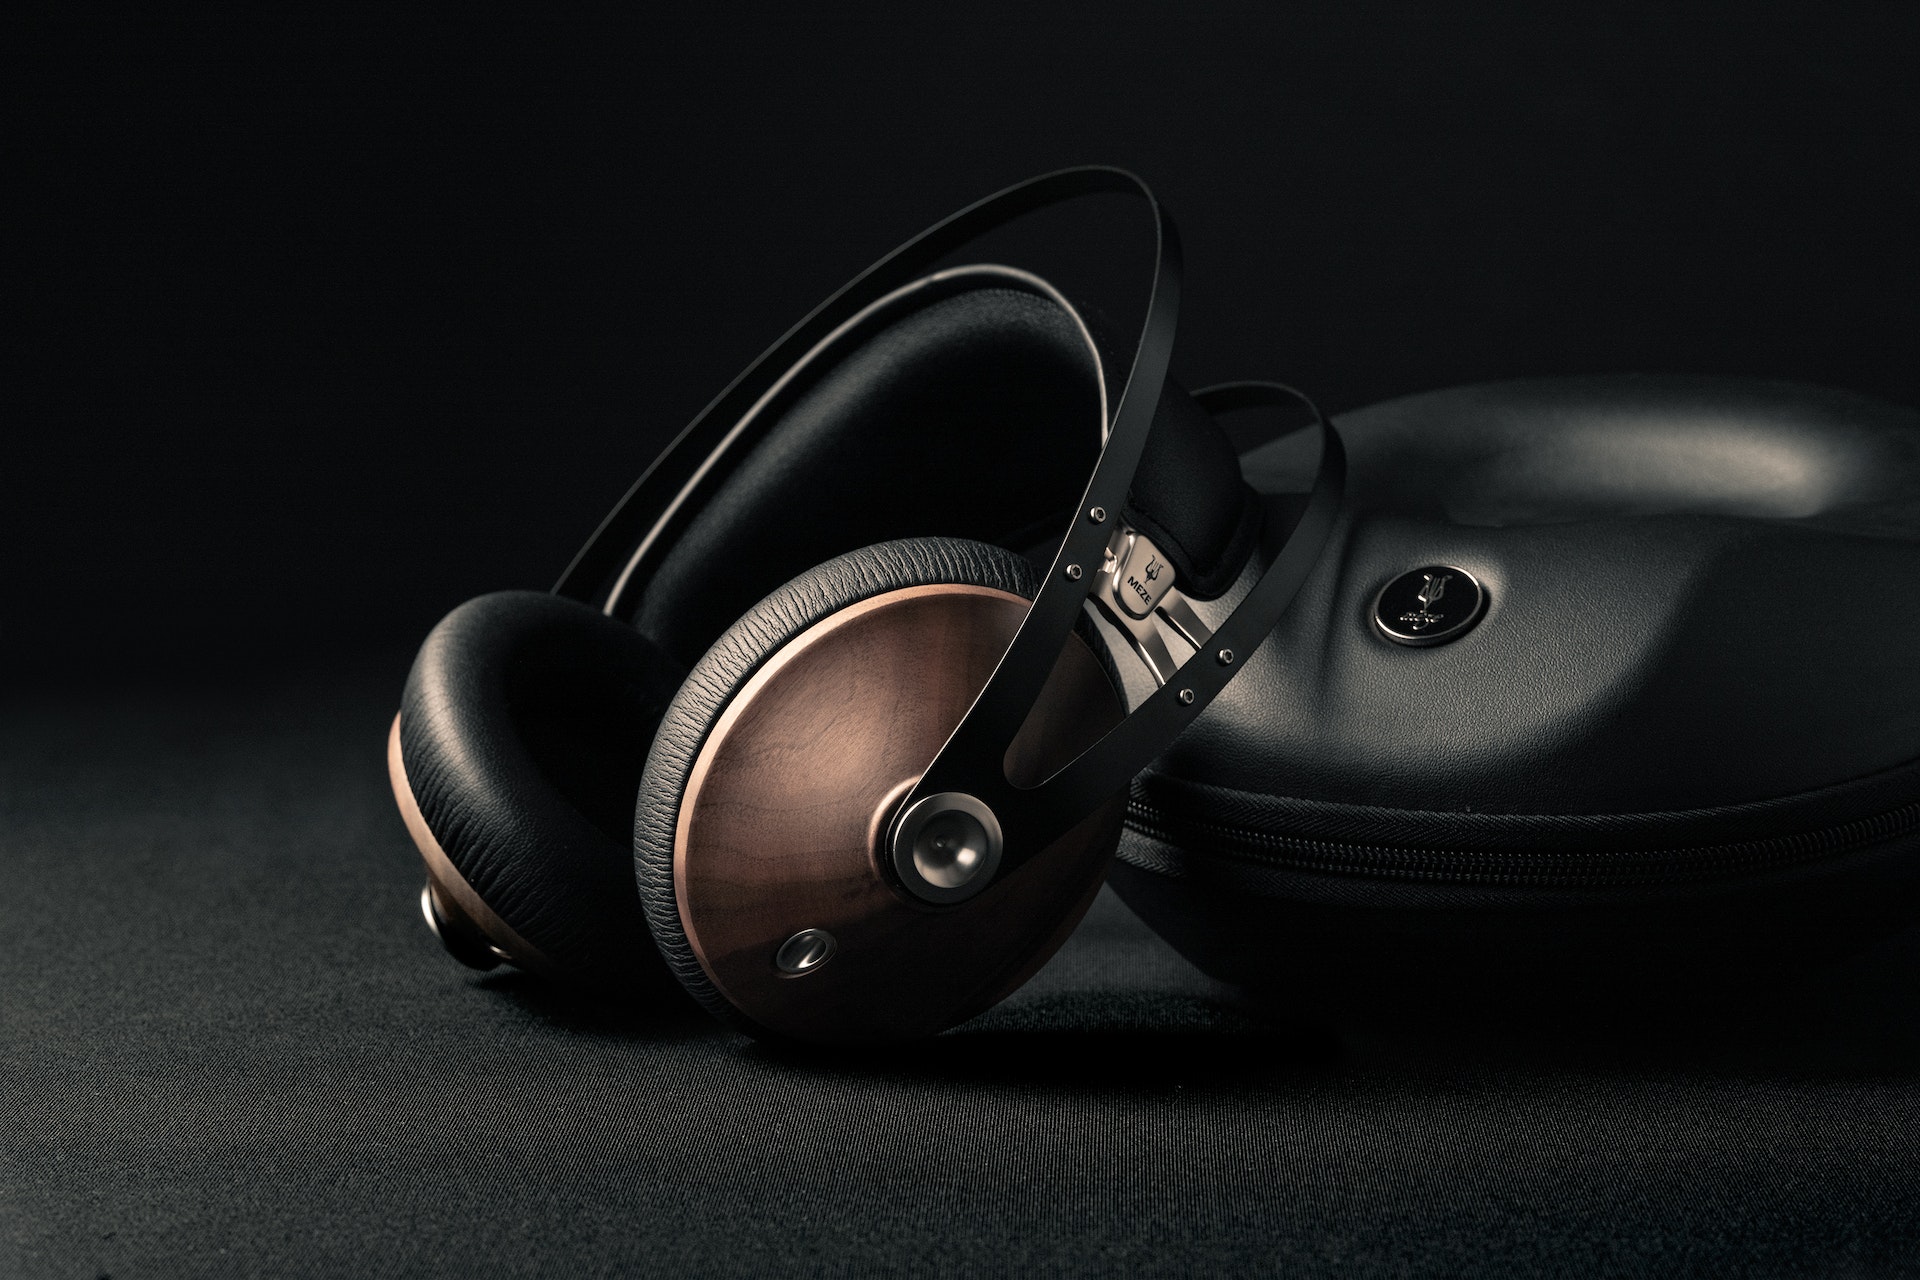 Monoprice 110010 Headphones Review: The Best Headphones for Music Lovers!